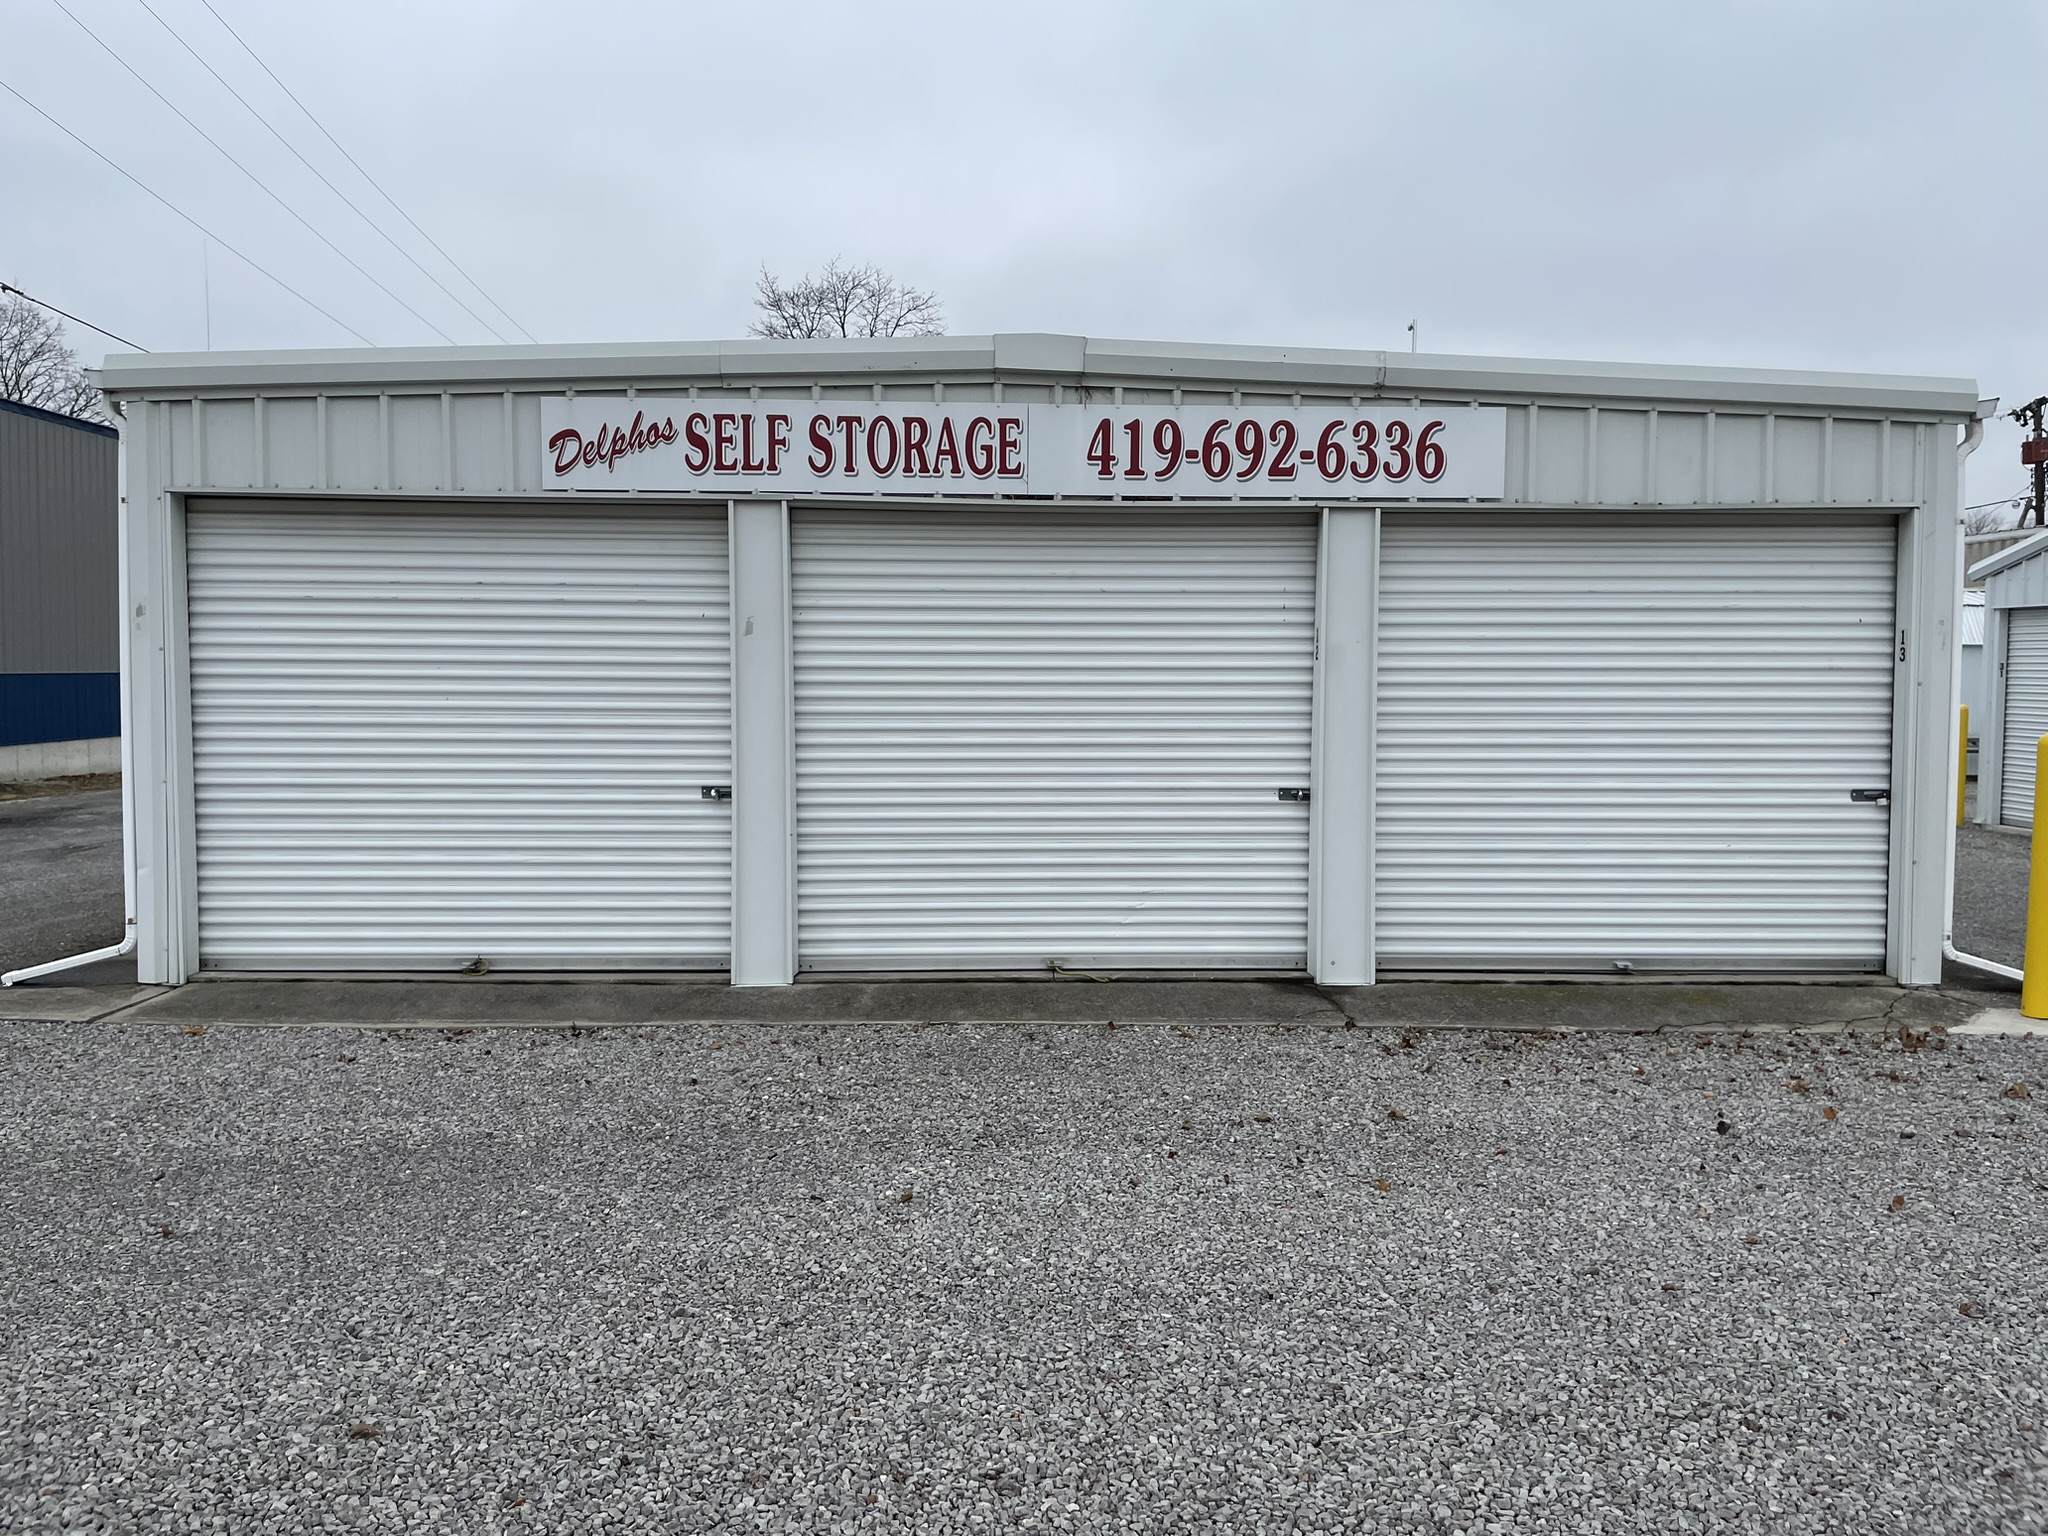 Drive-Up Self Storage Units in Delphos, Ohio